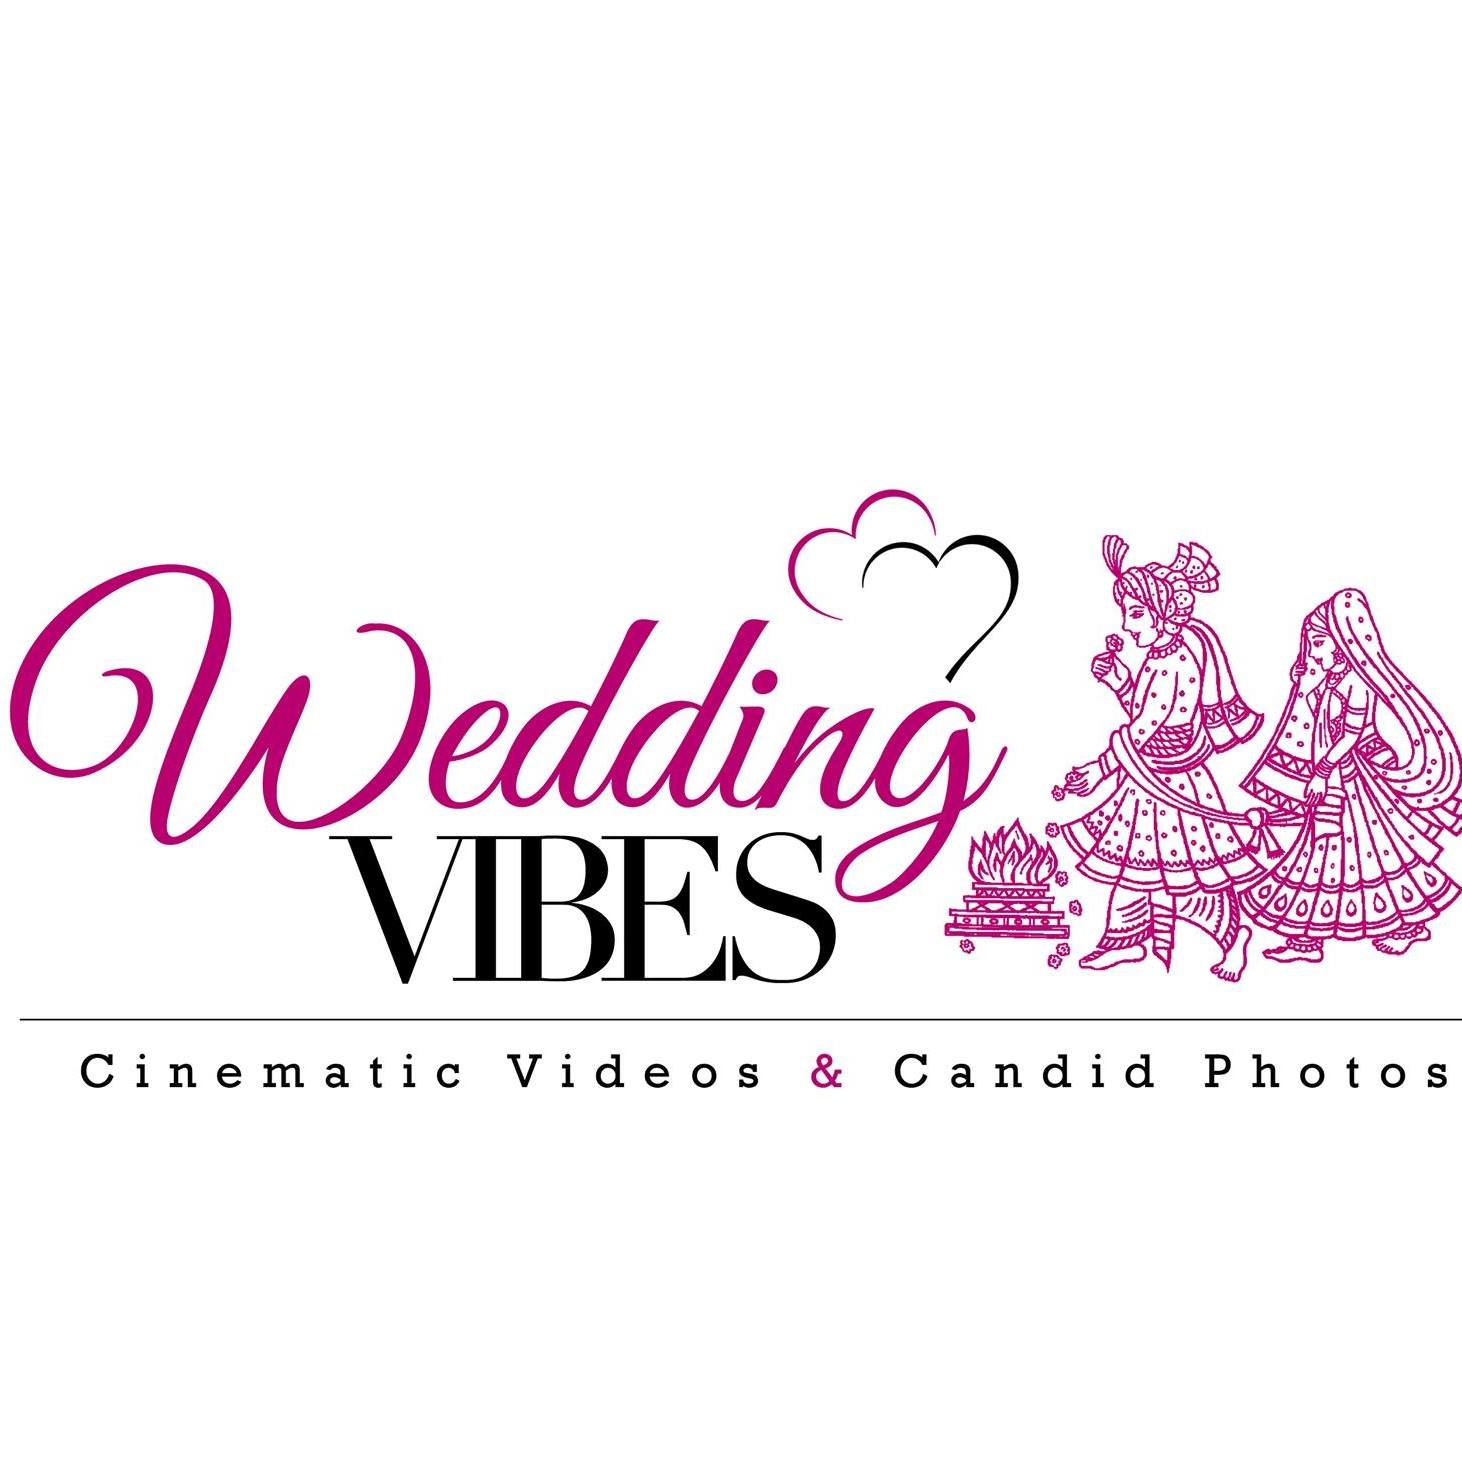 Wedding vibes - Logo